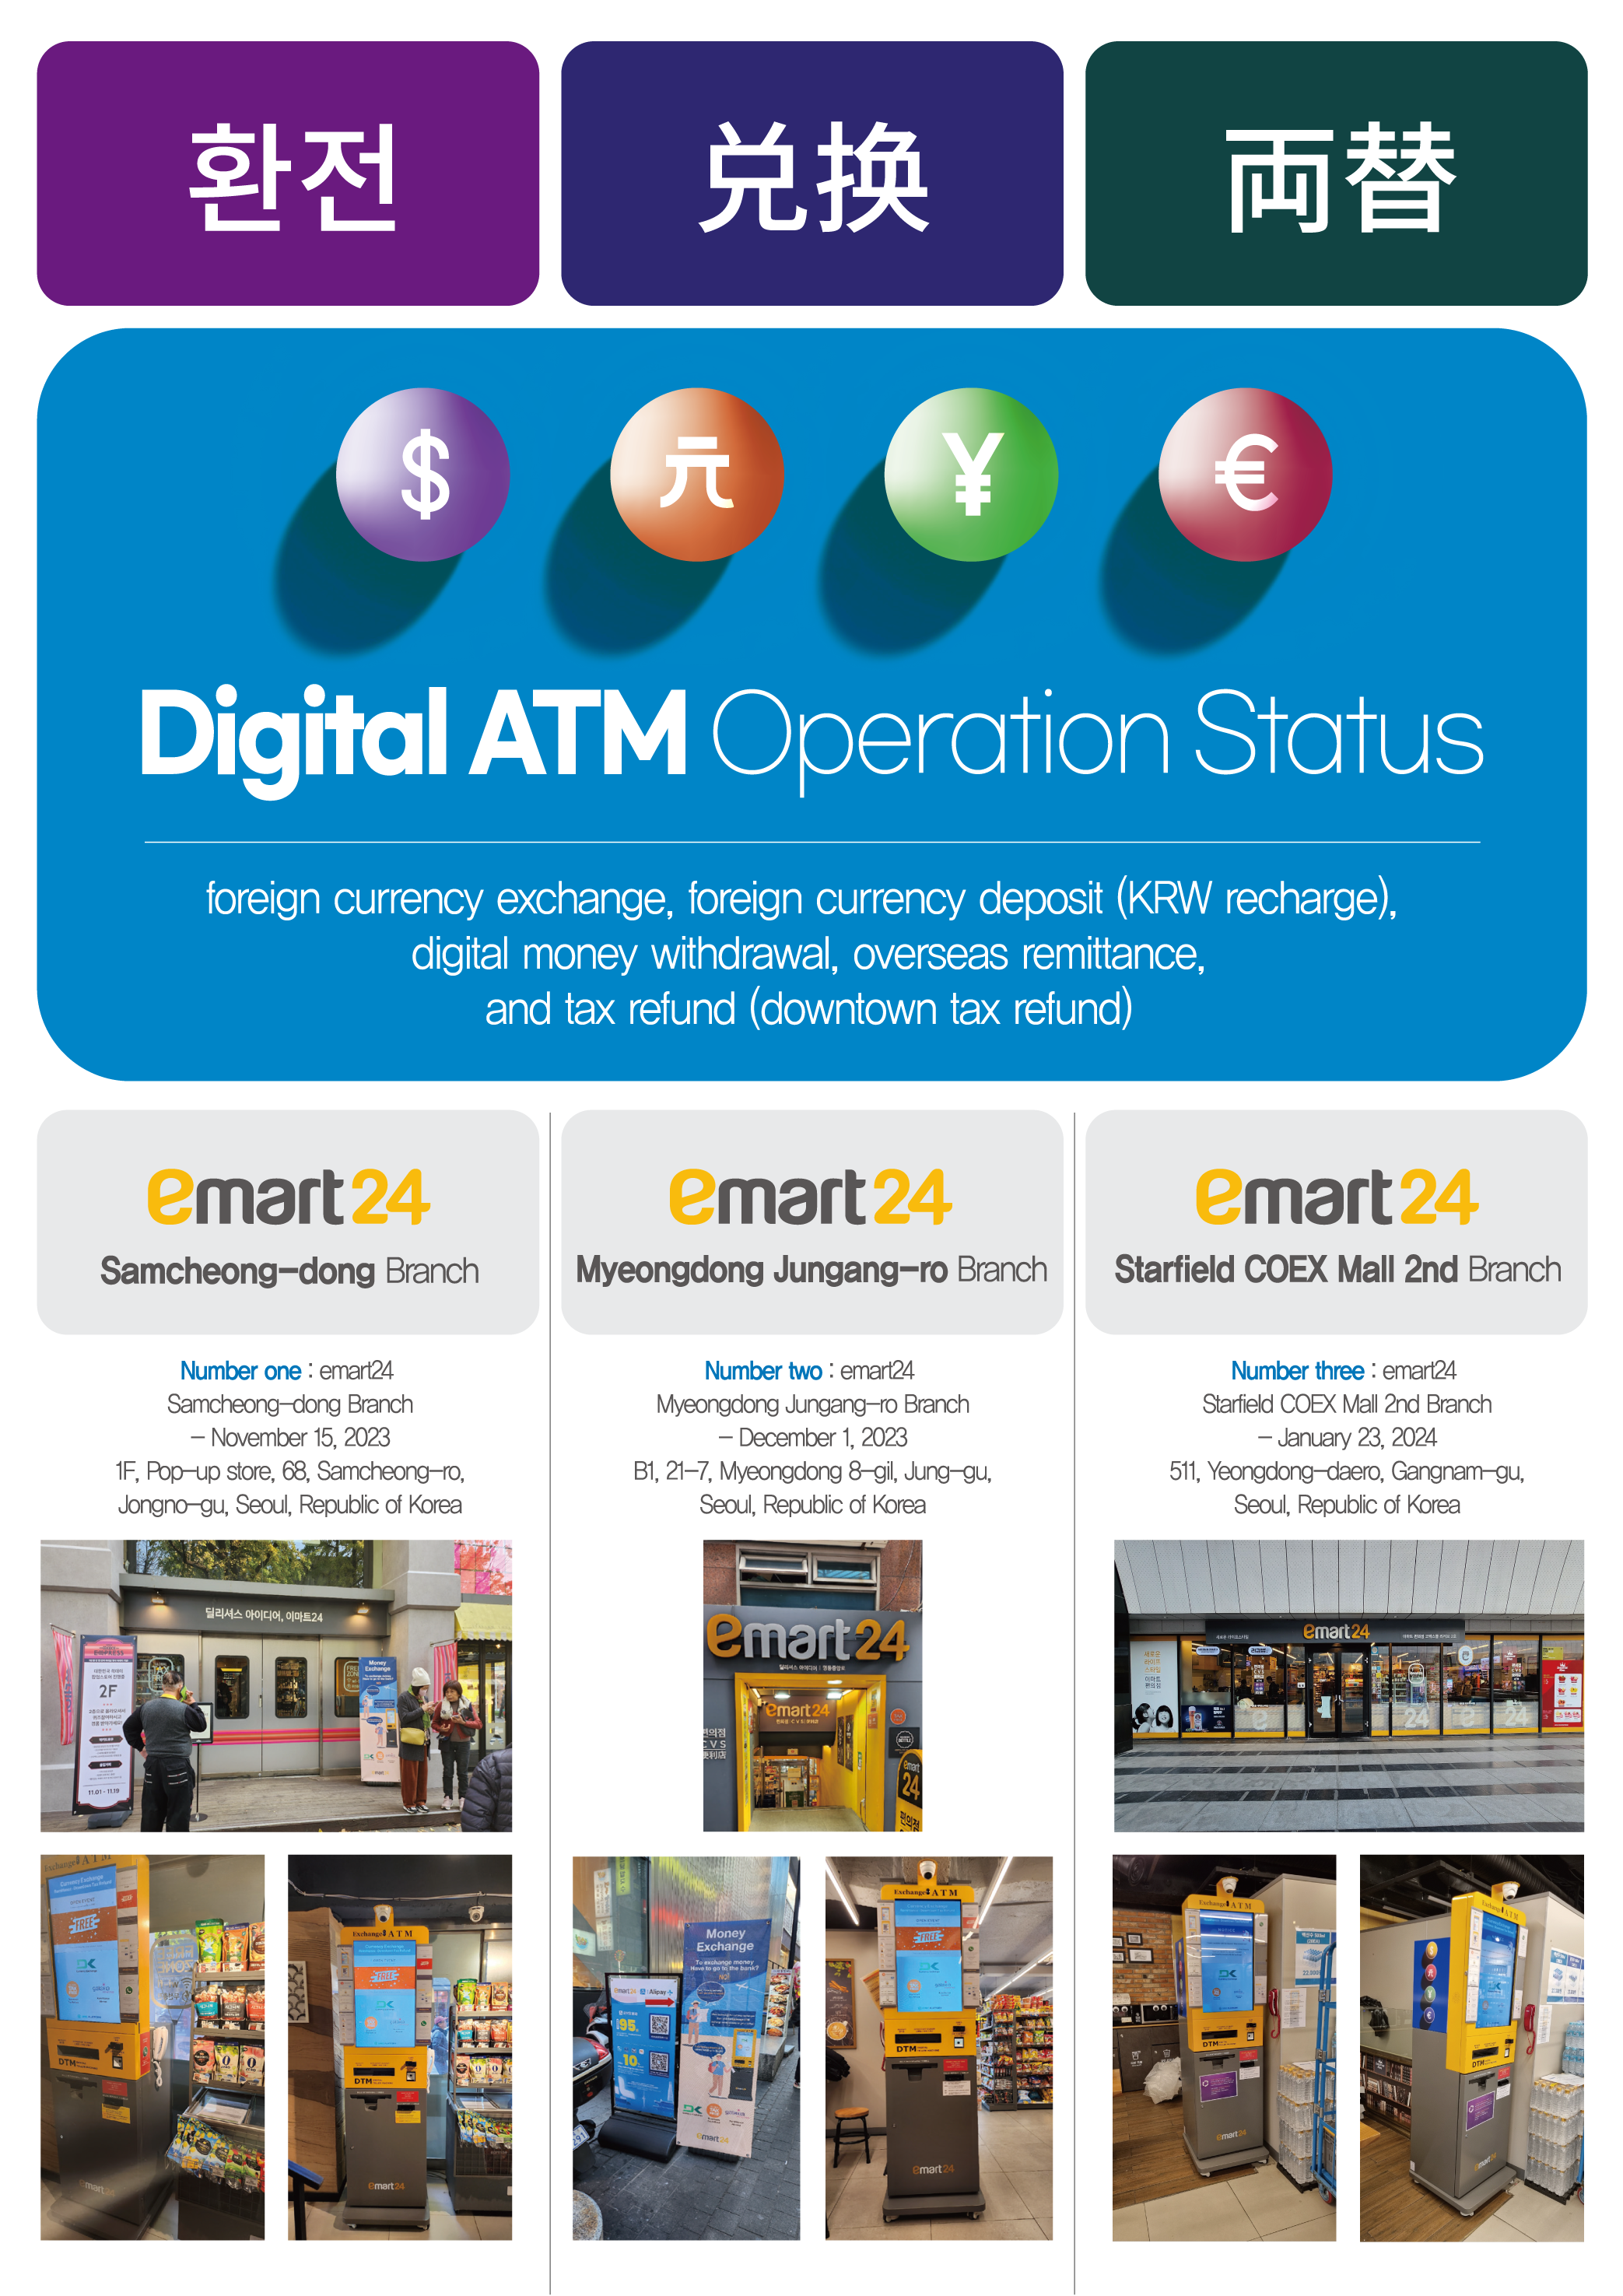 Digital ATM Operation Status